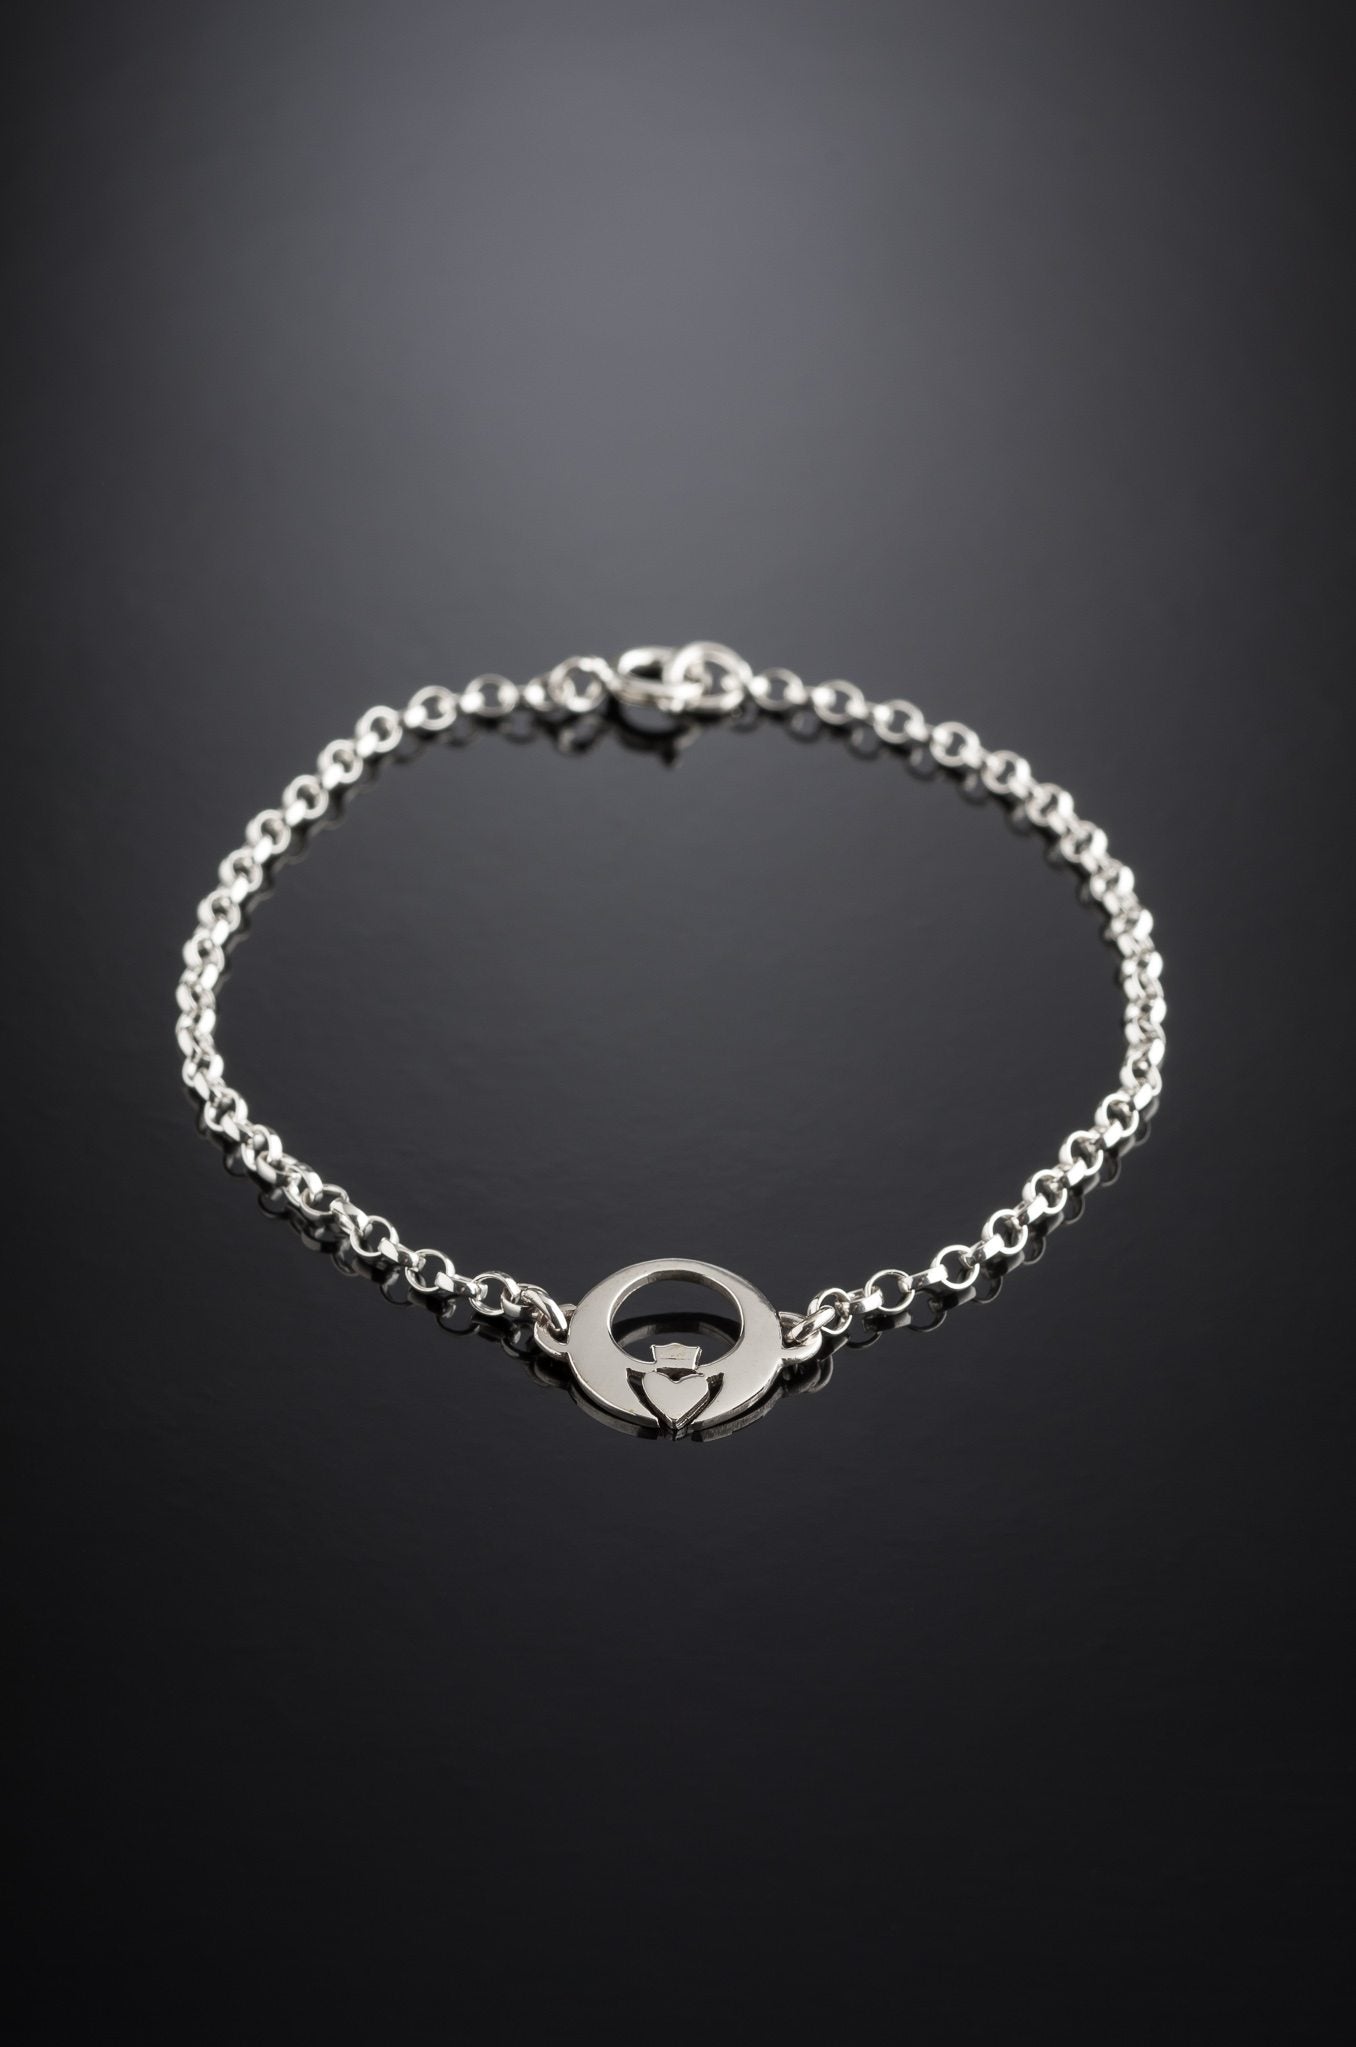 Claddagh Design, Contemporary Claddagh Bracelet Silver